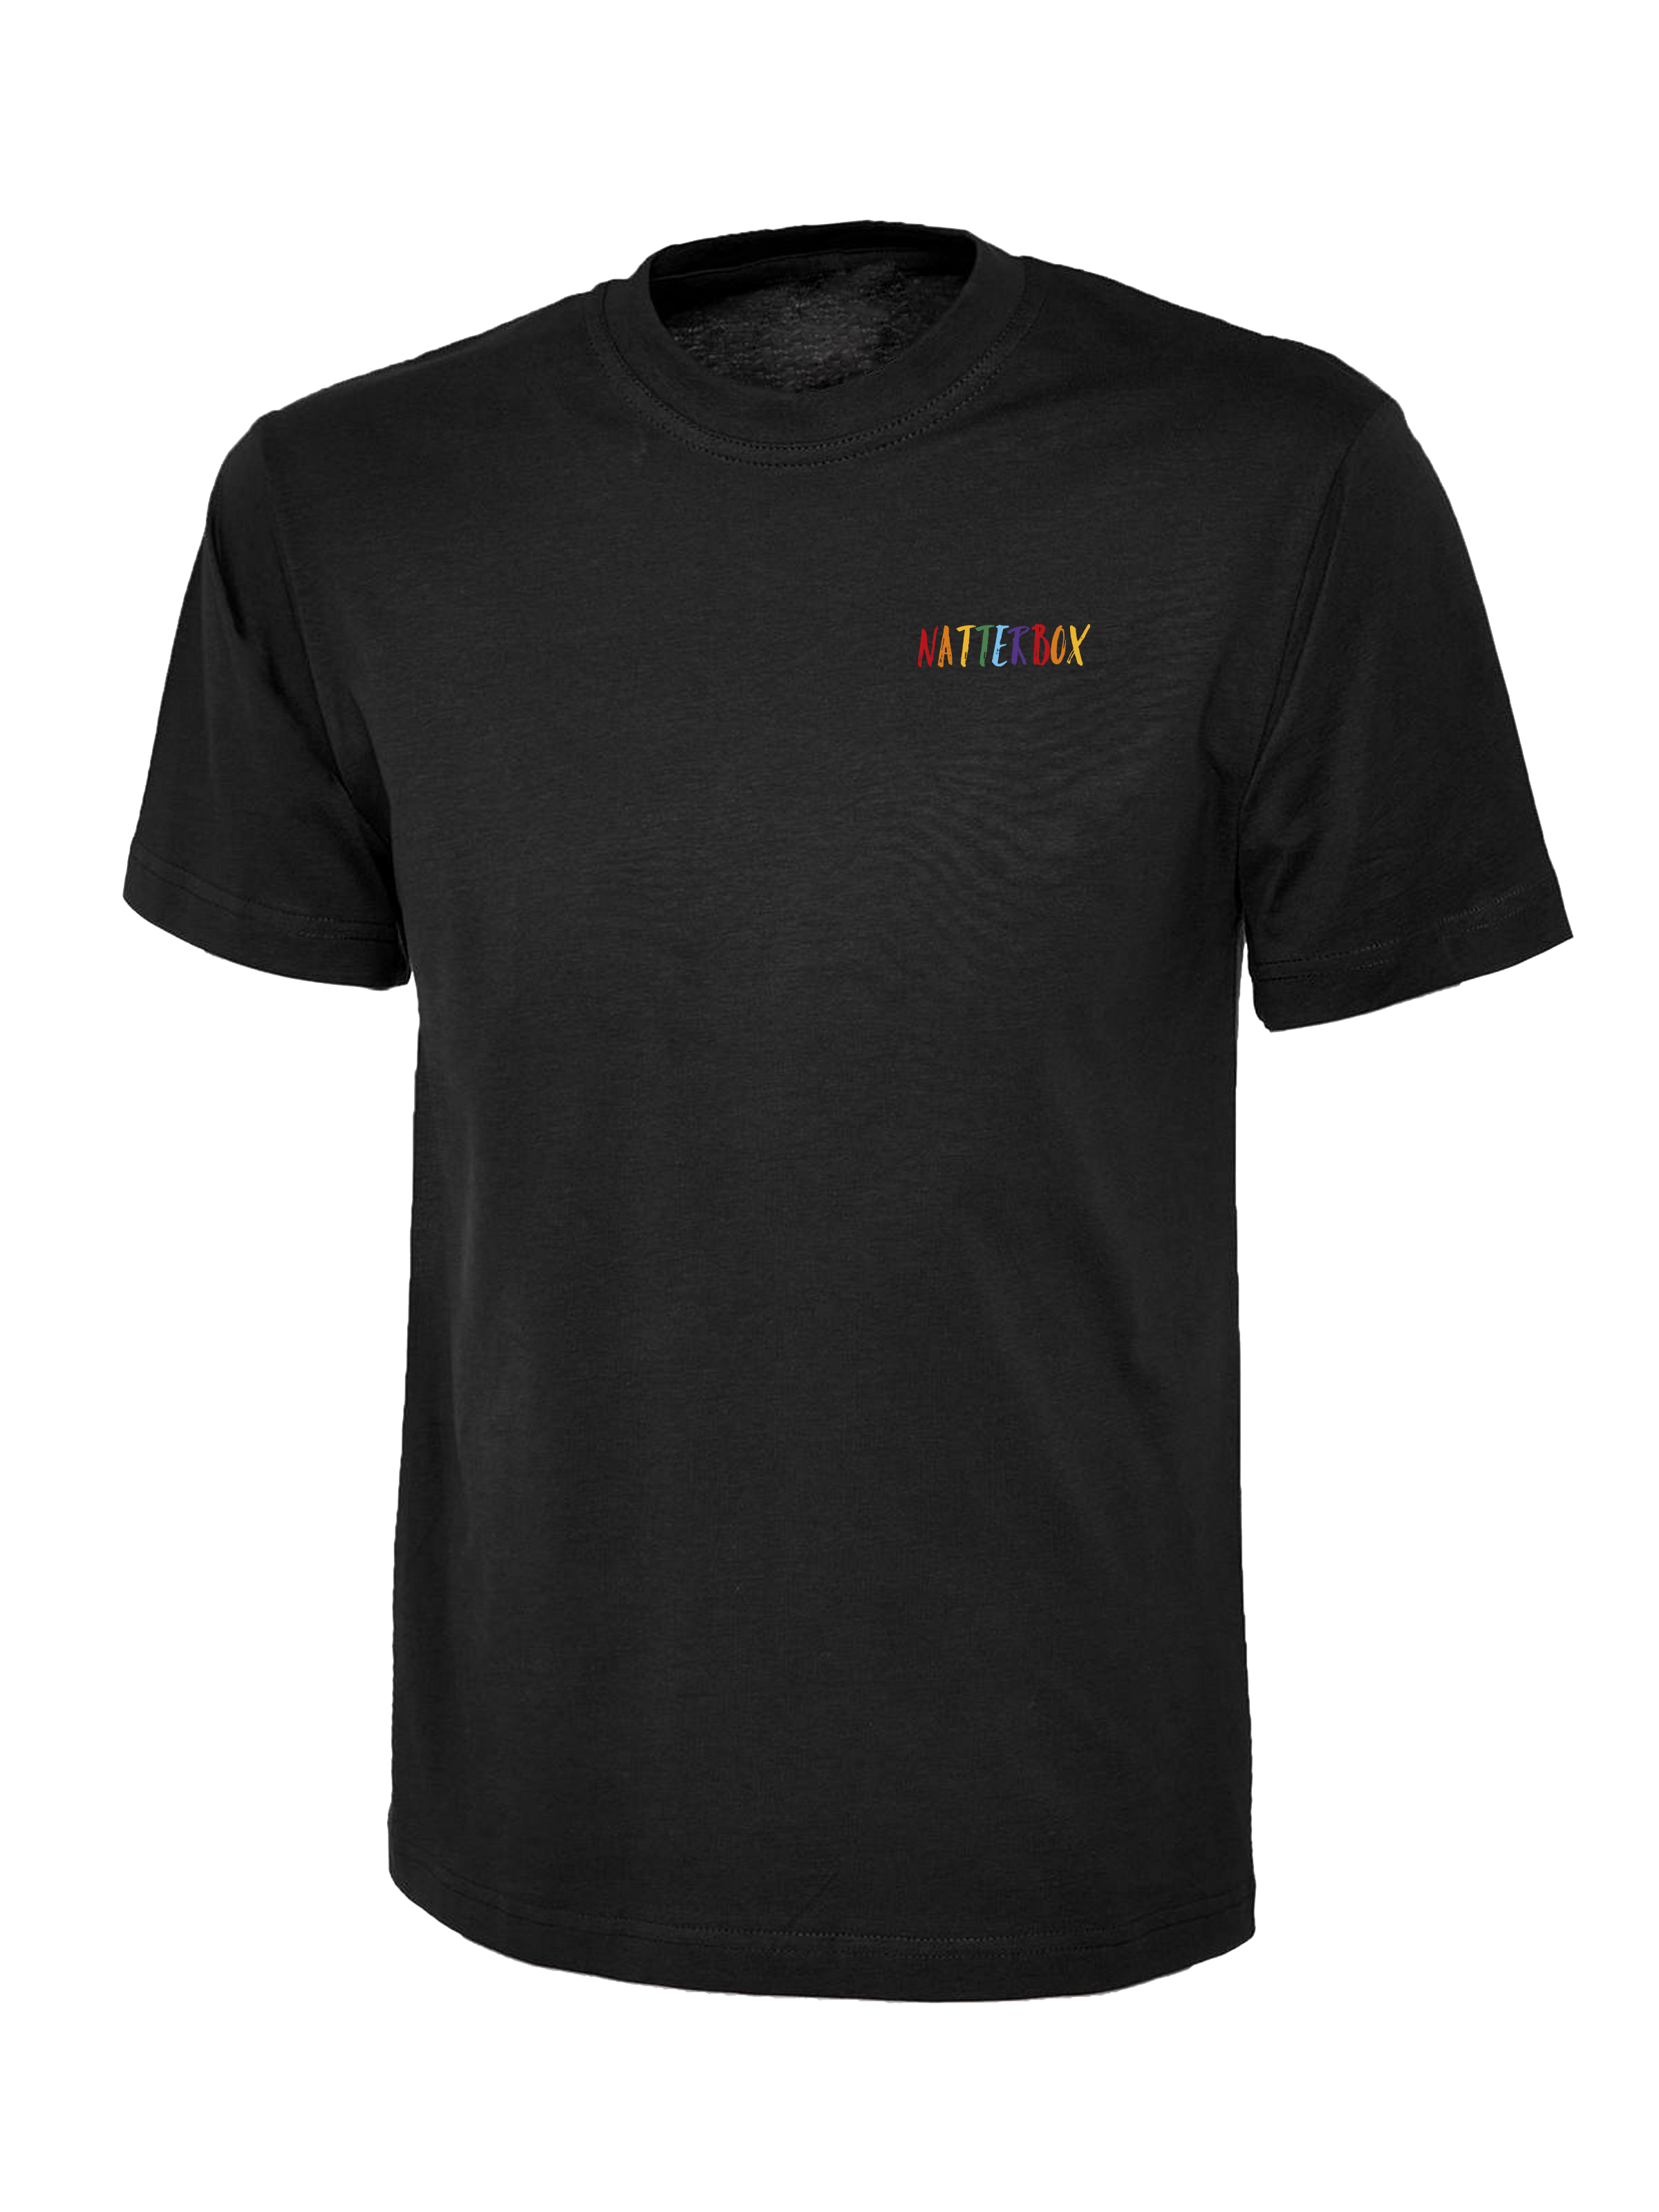 NatterBox-001 T shirt